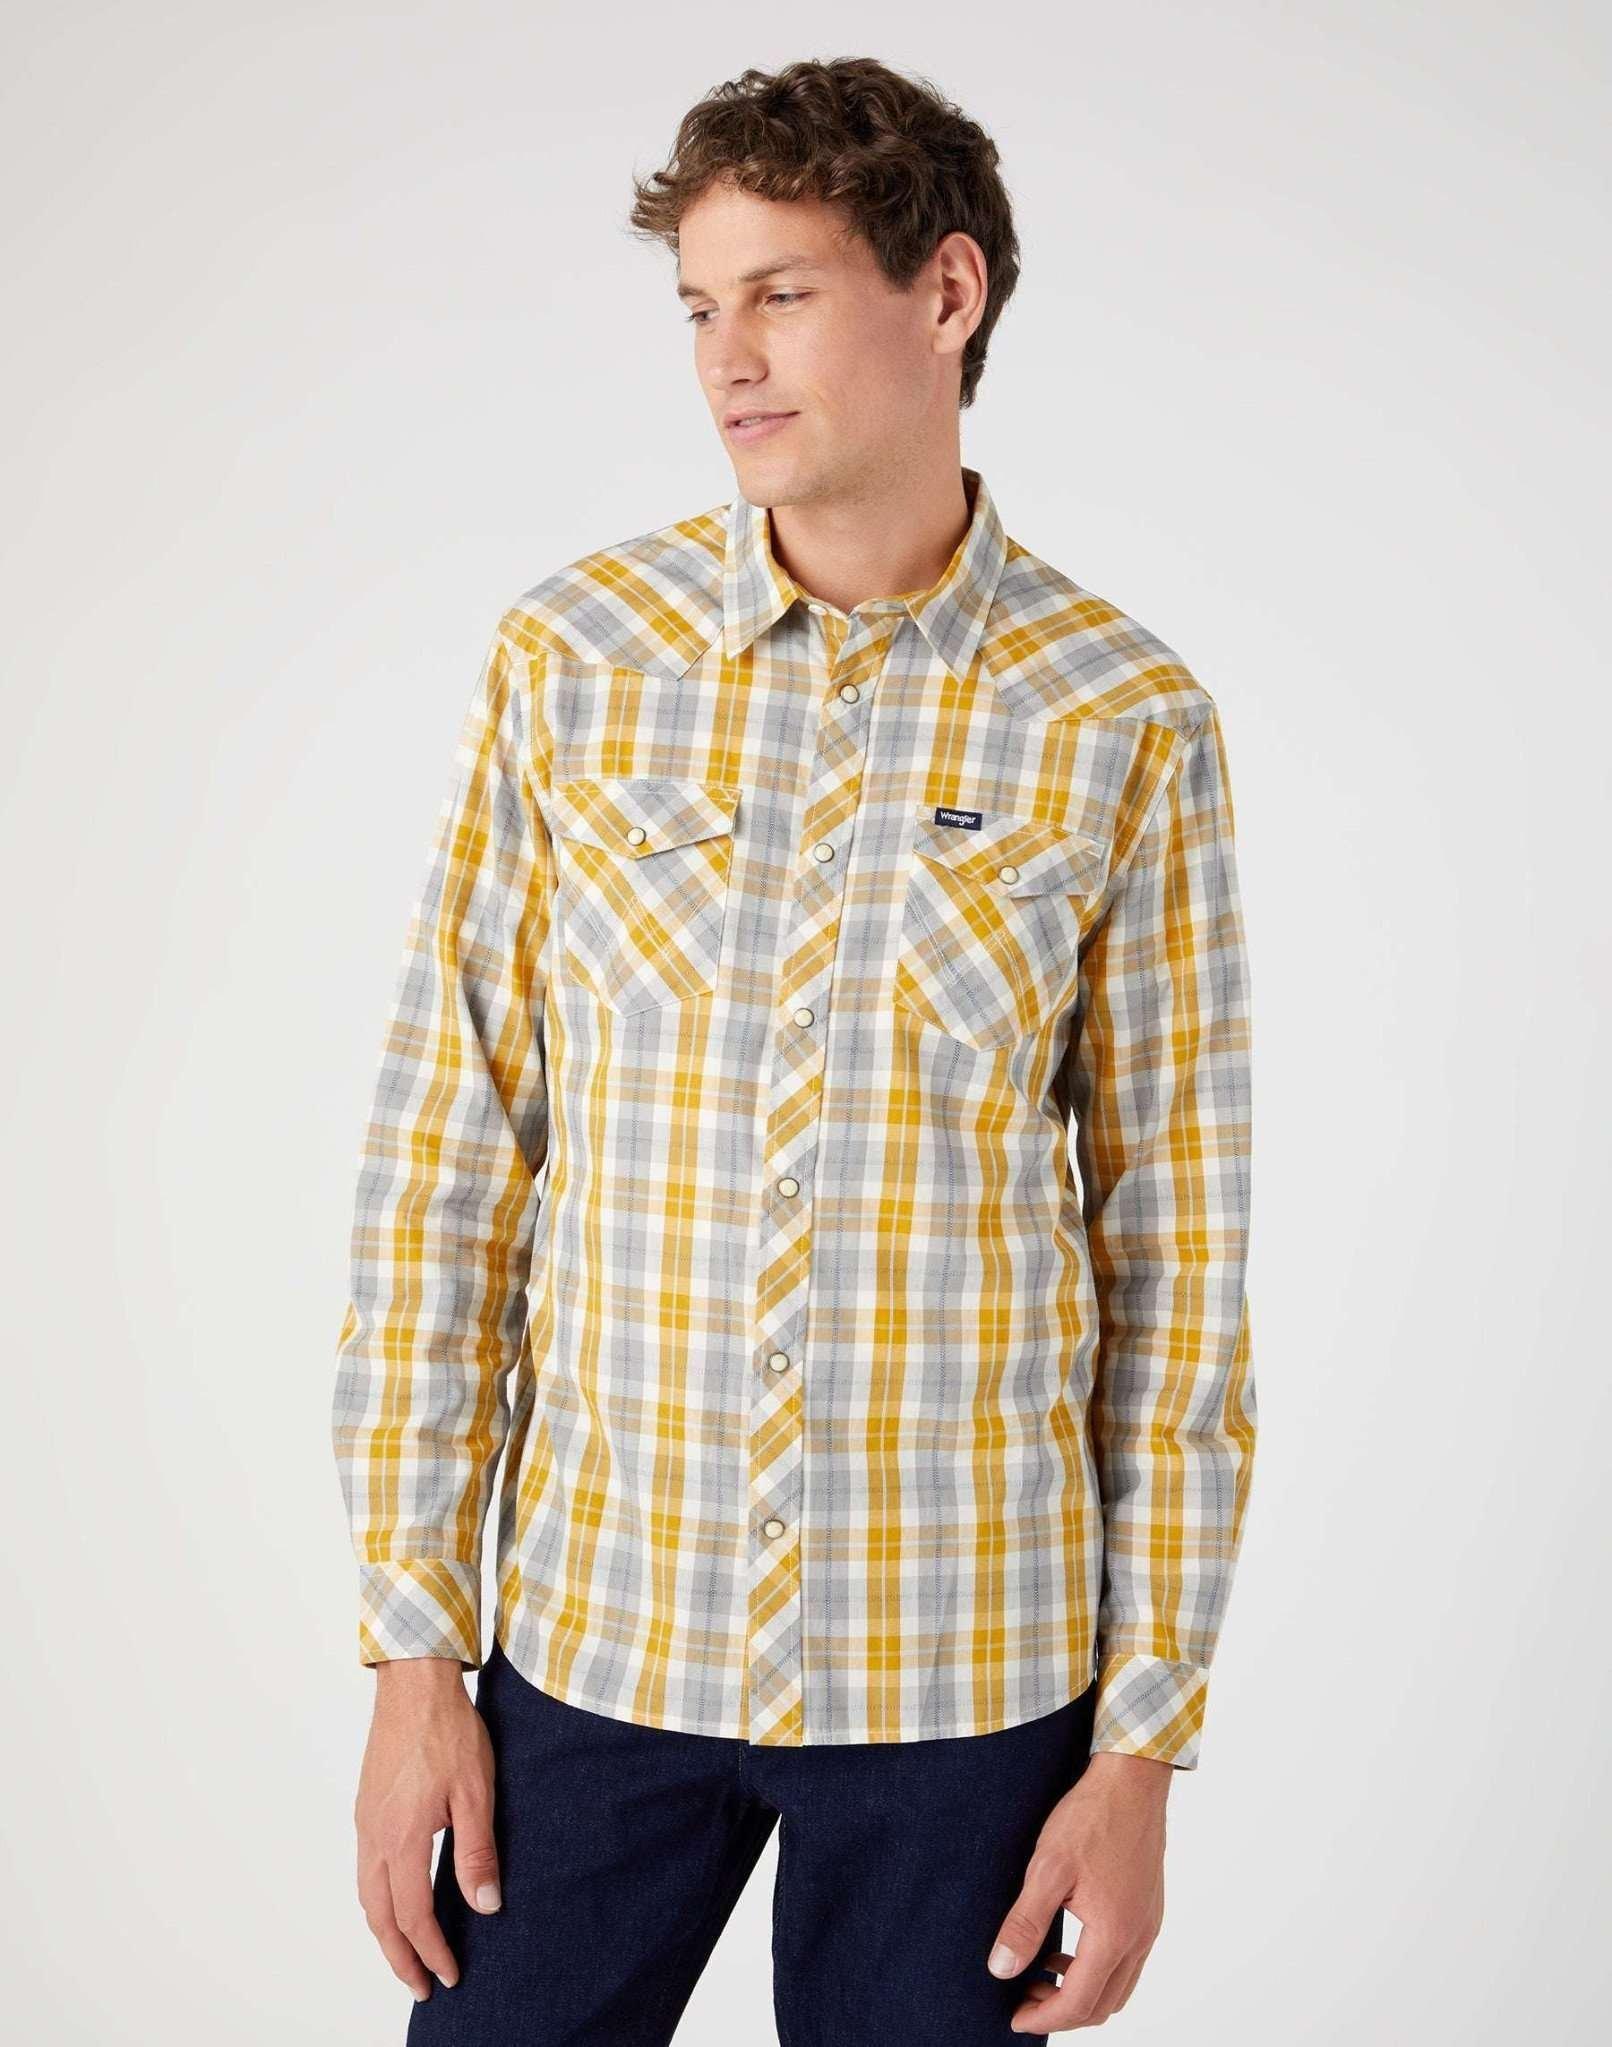 Hemden Western Shirt Herren Gelb Bunt M von Wrangler